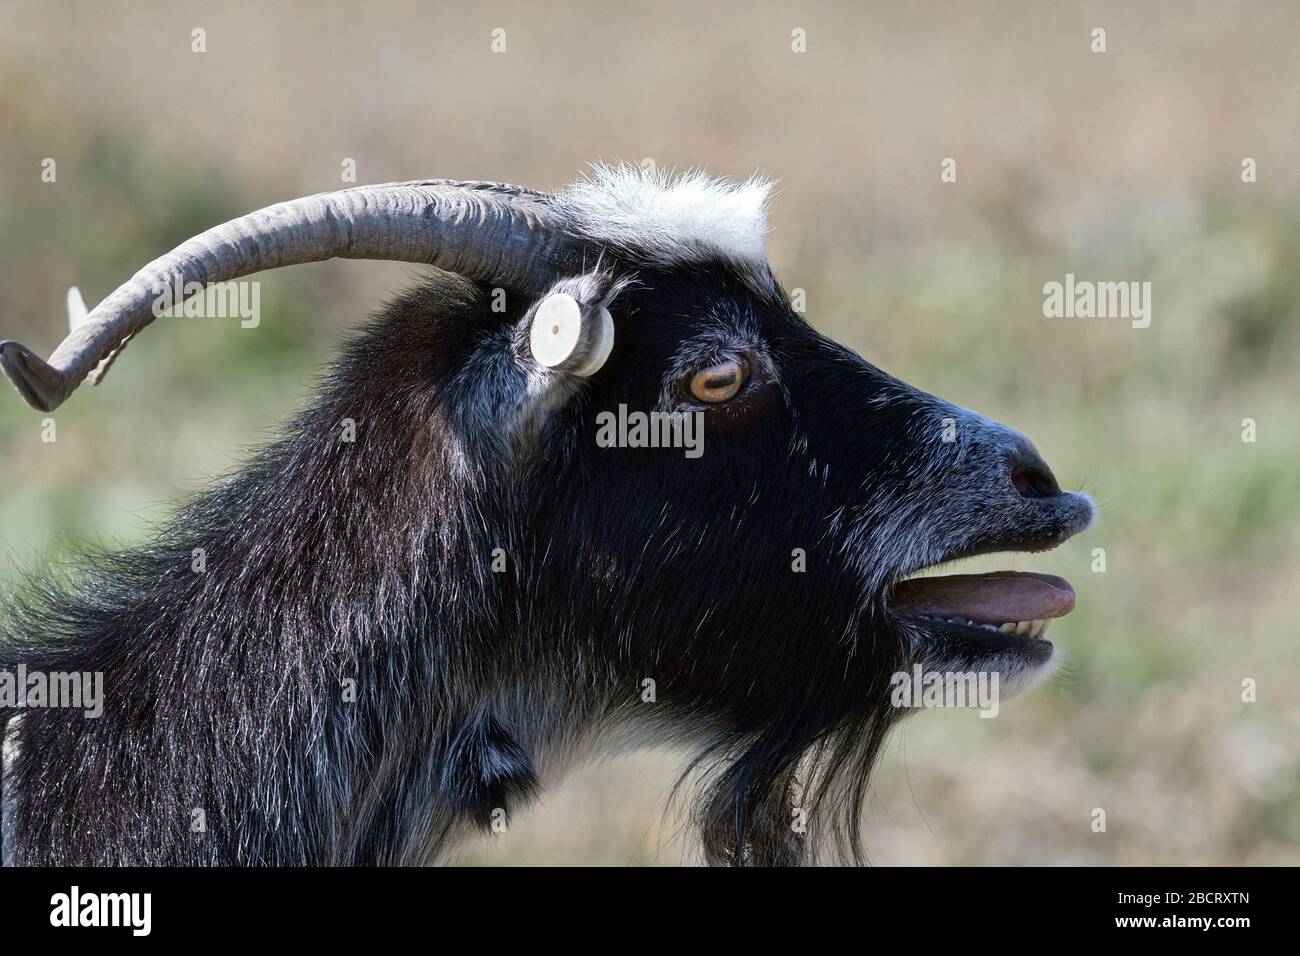 retrato de cabra billy nervioso sobre fondo desenfocado Foto de stock